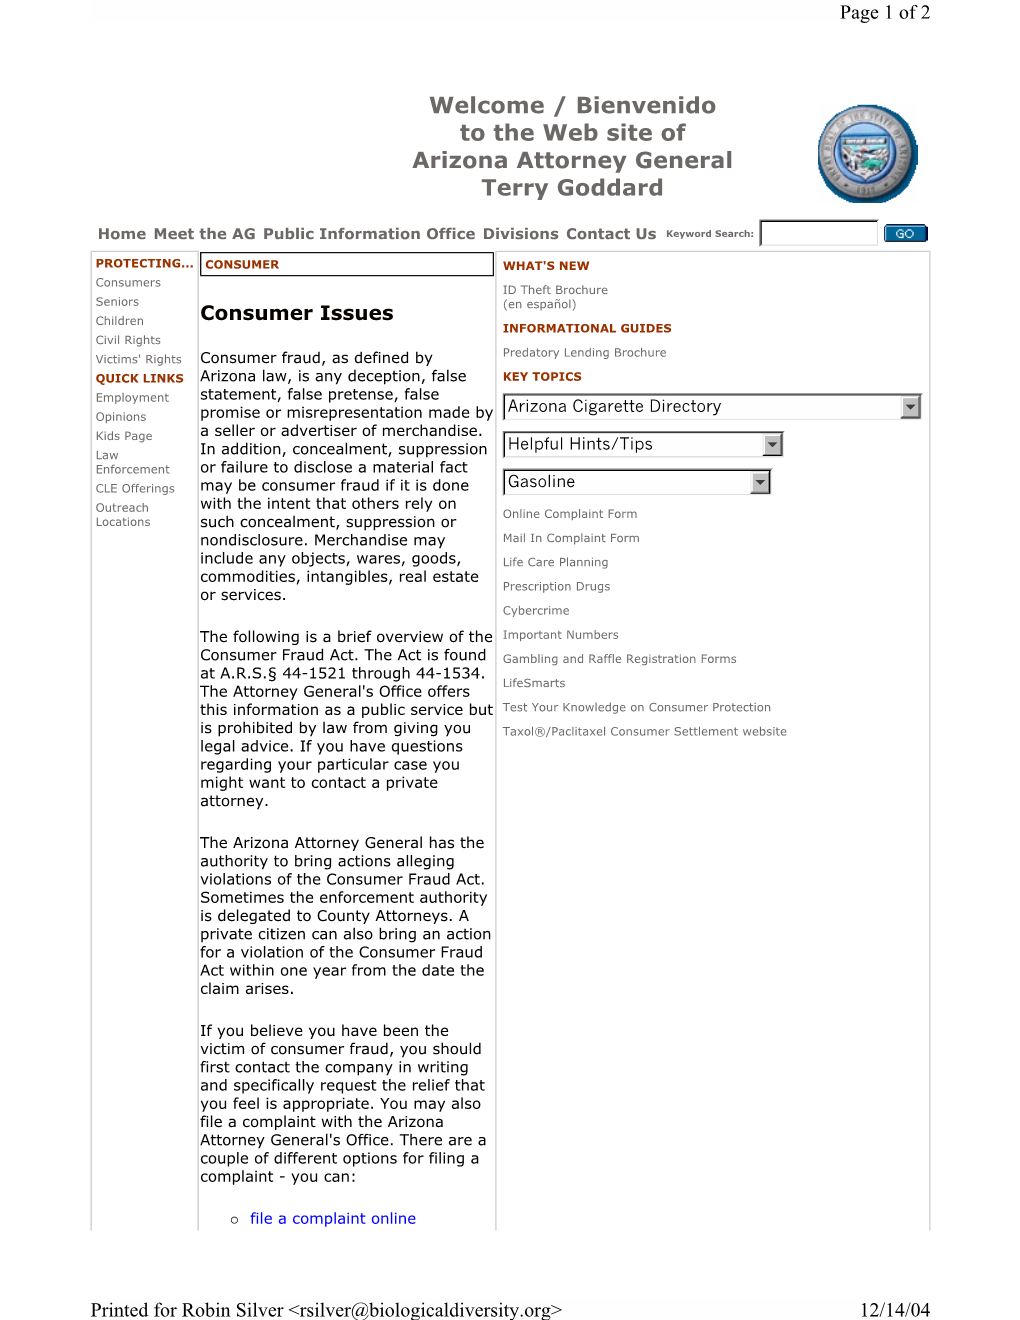 Bienvenido to the Web Site of Arizona Attorney General Terry Goddard